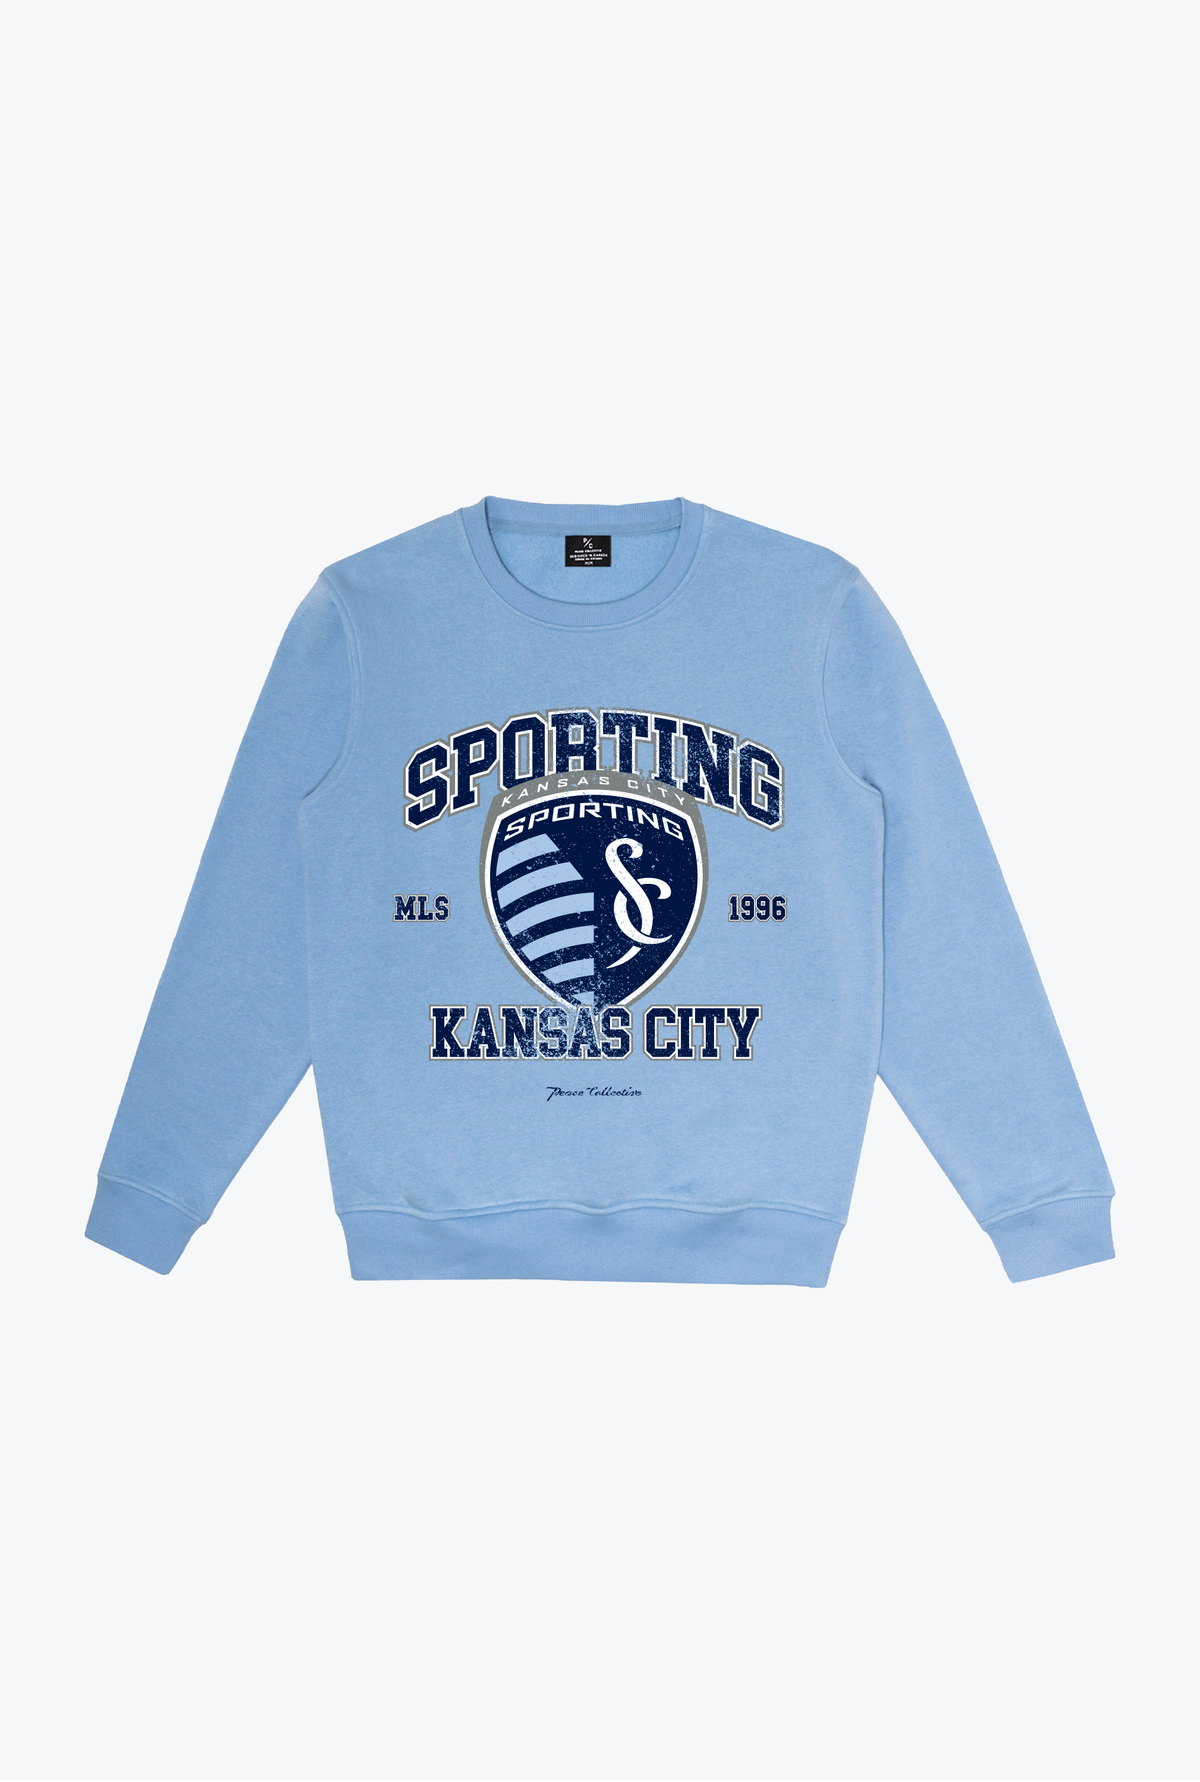 Sporting Kansas City Vintage Washed Crewneck - Vista Blue